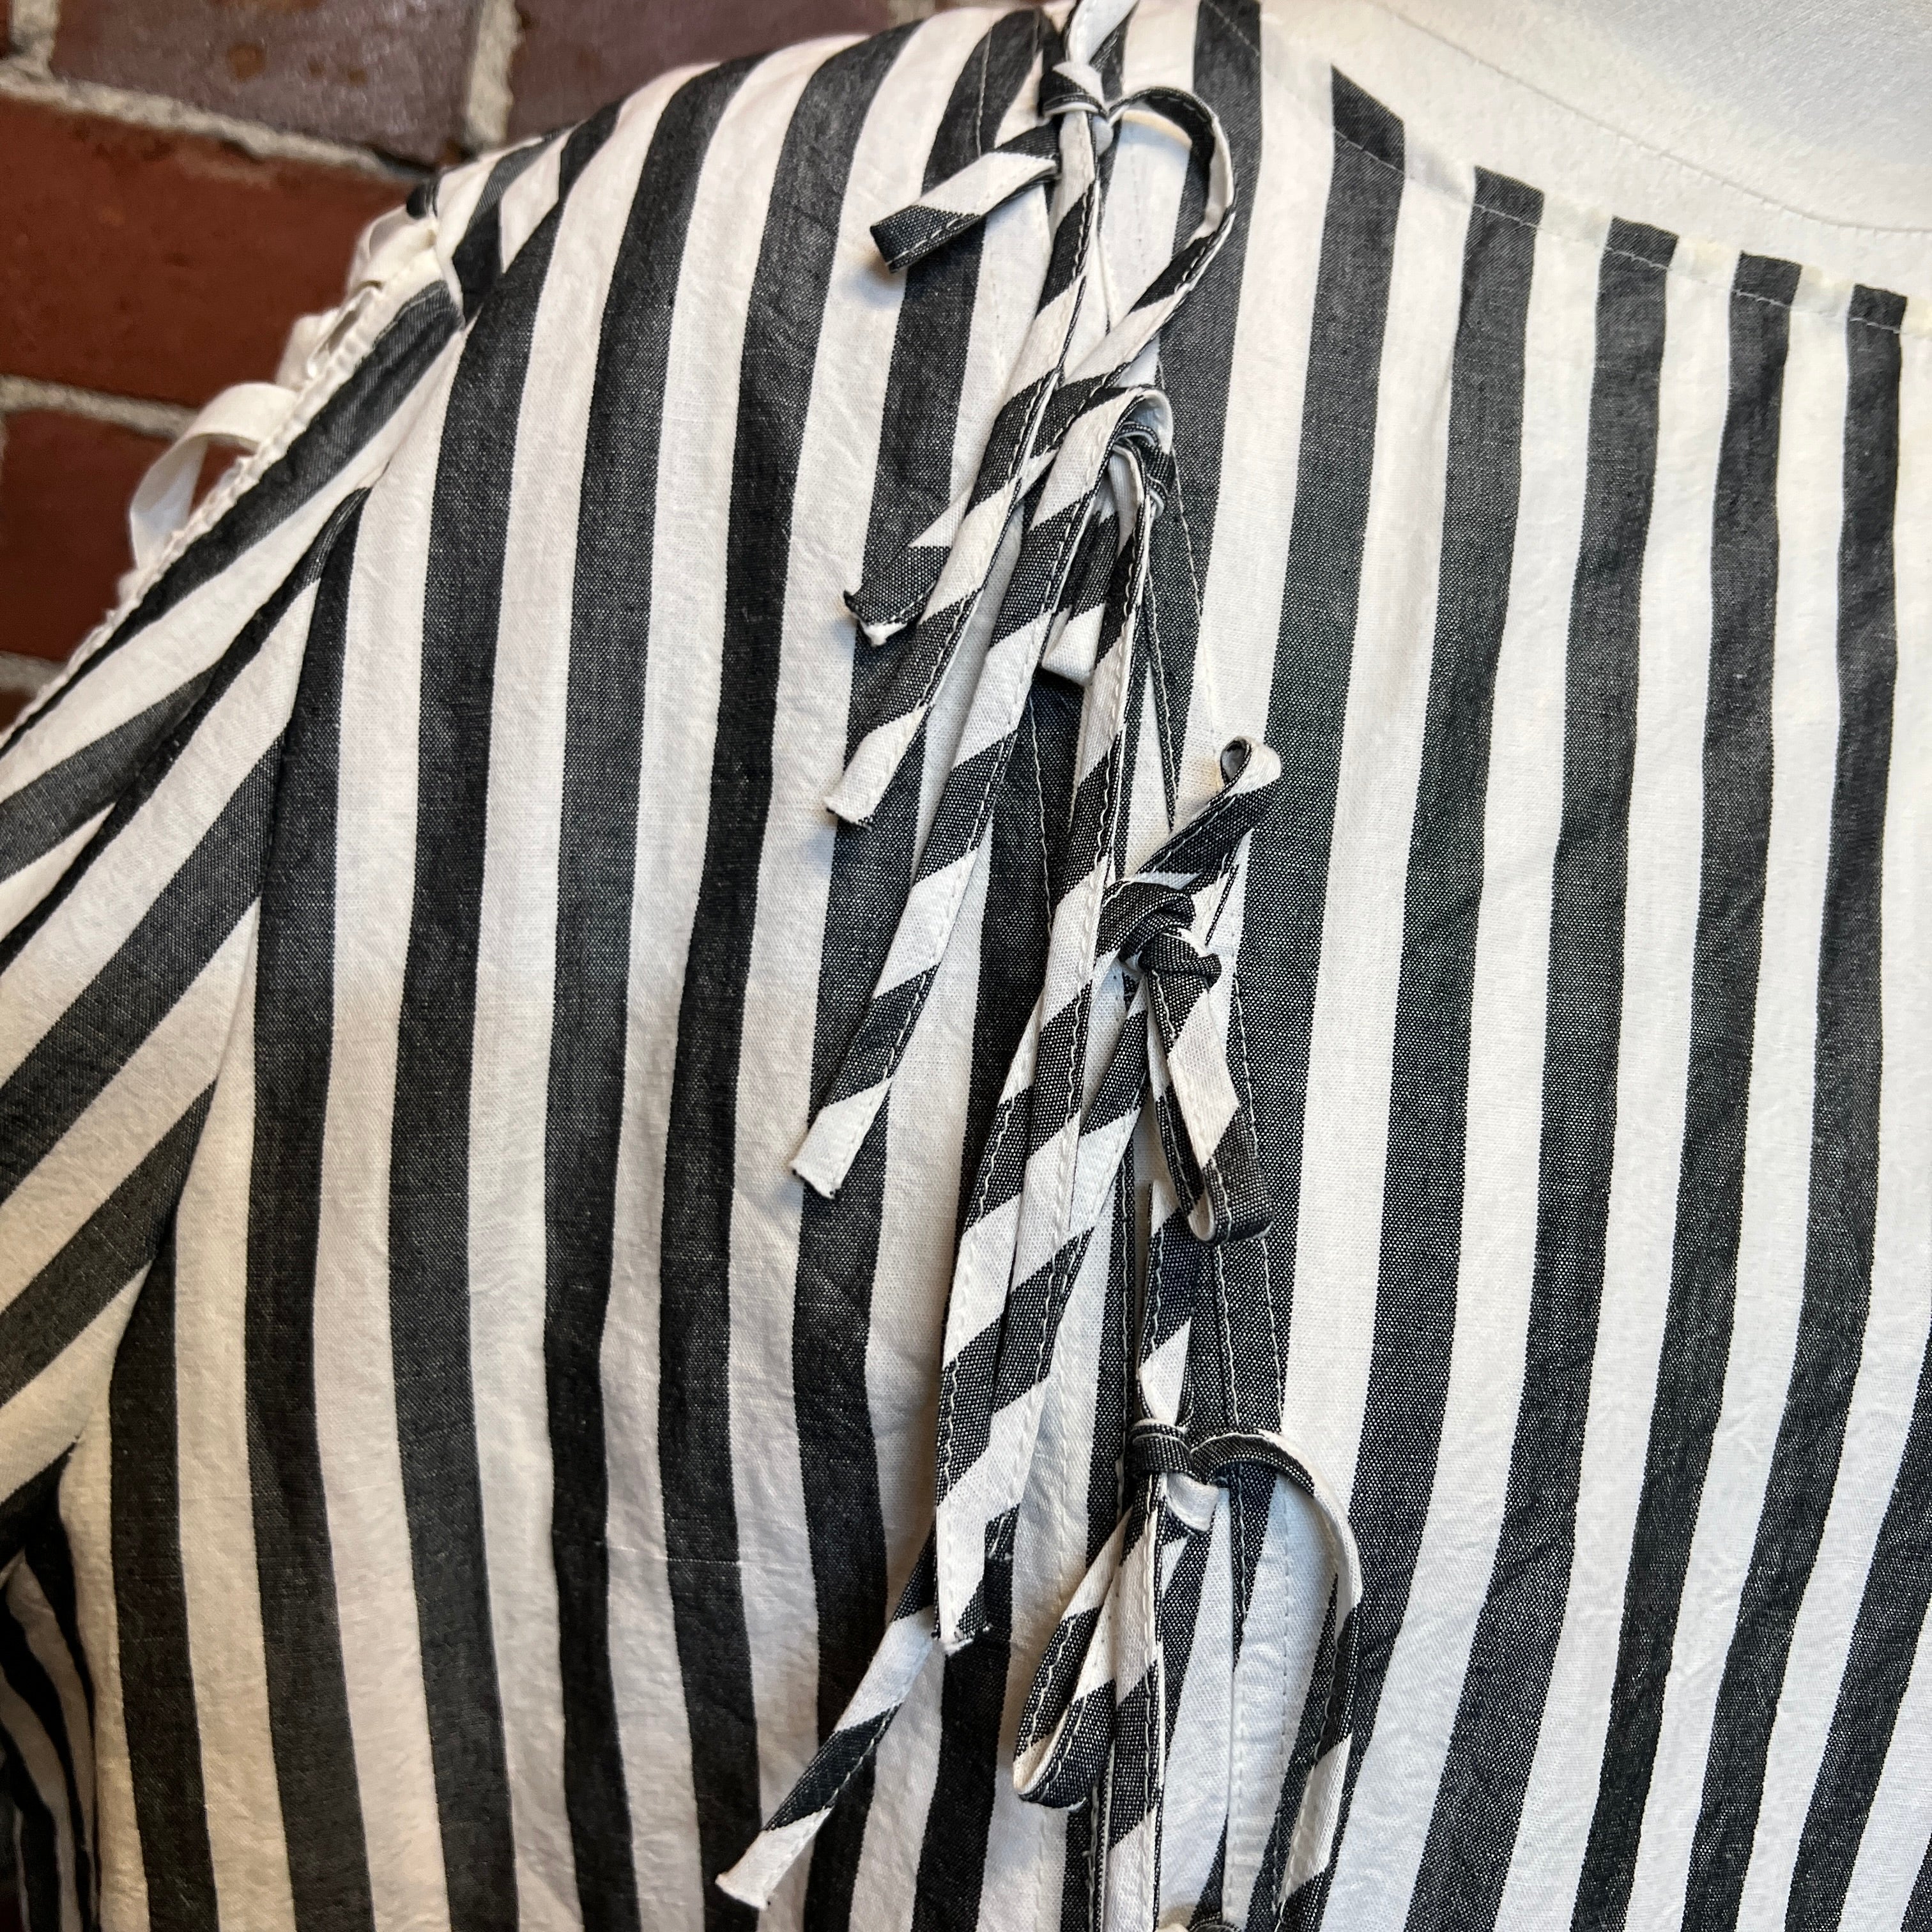 DAMIR DOMA striped cotton dress